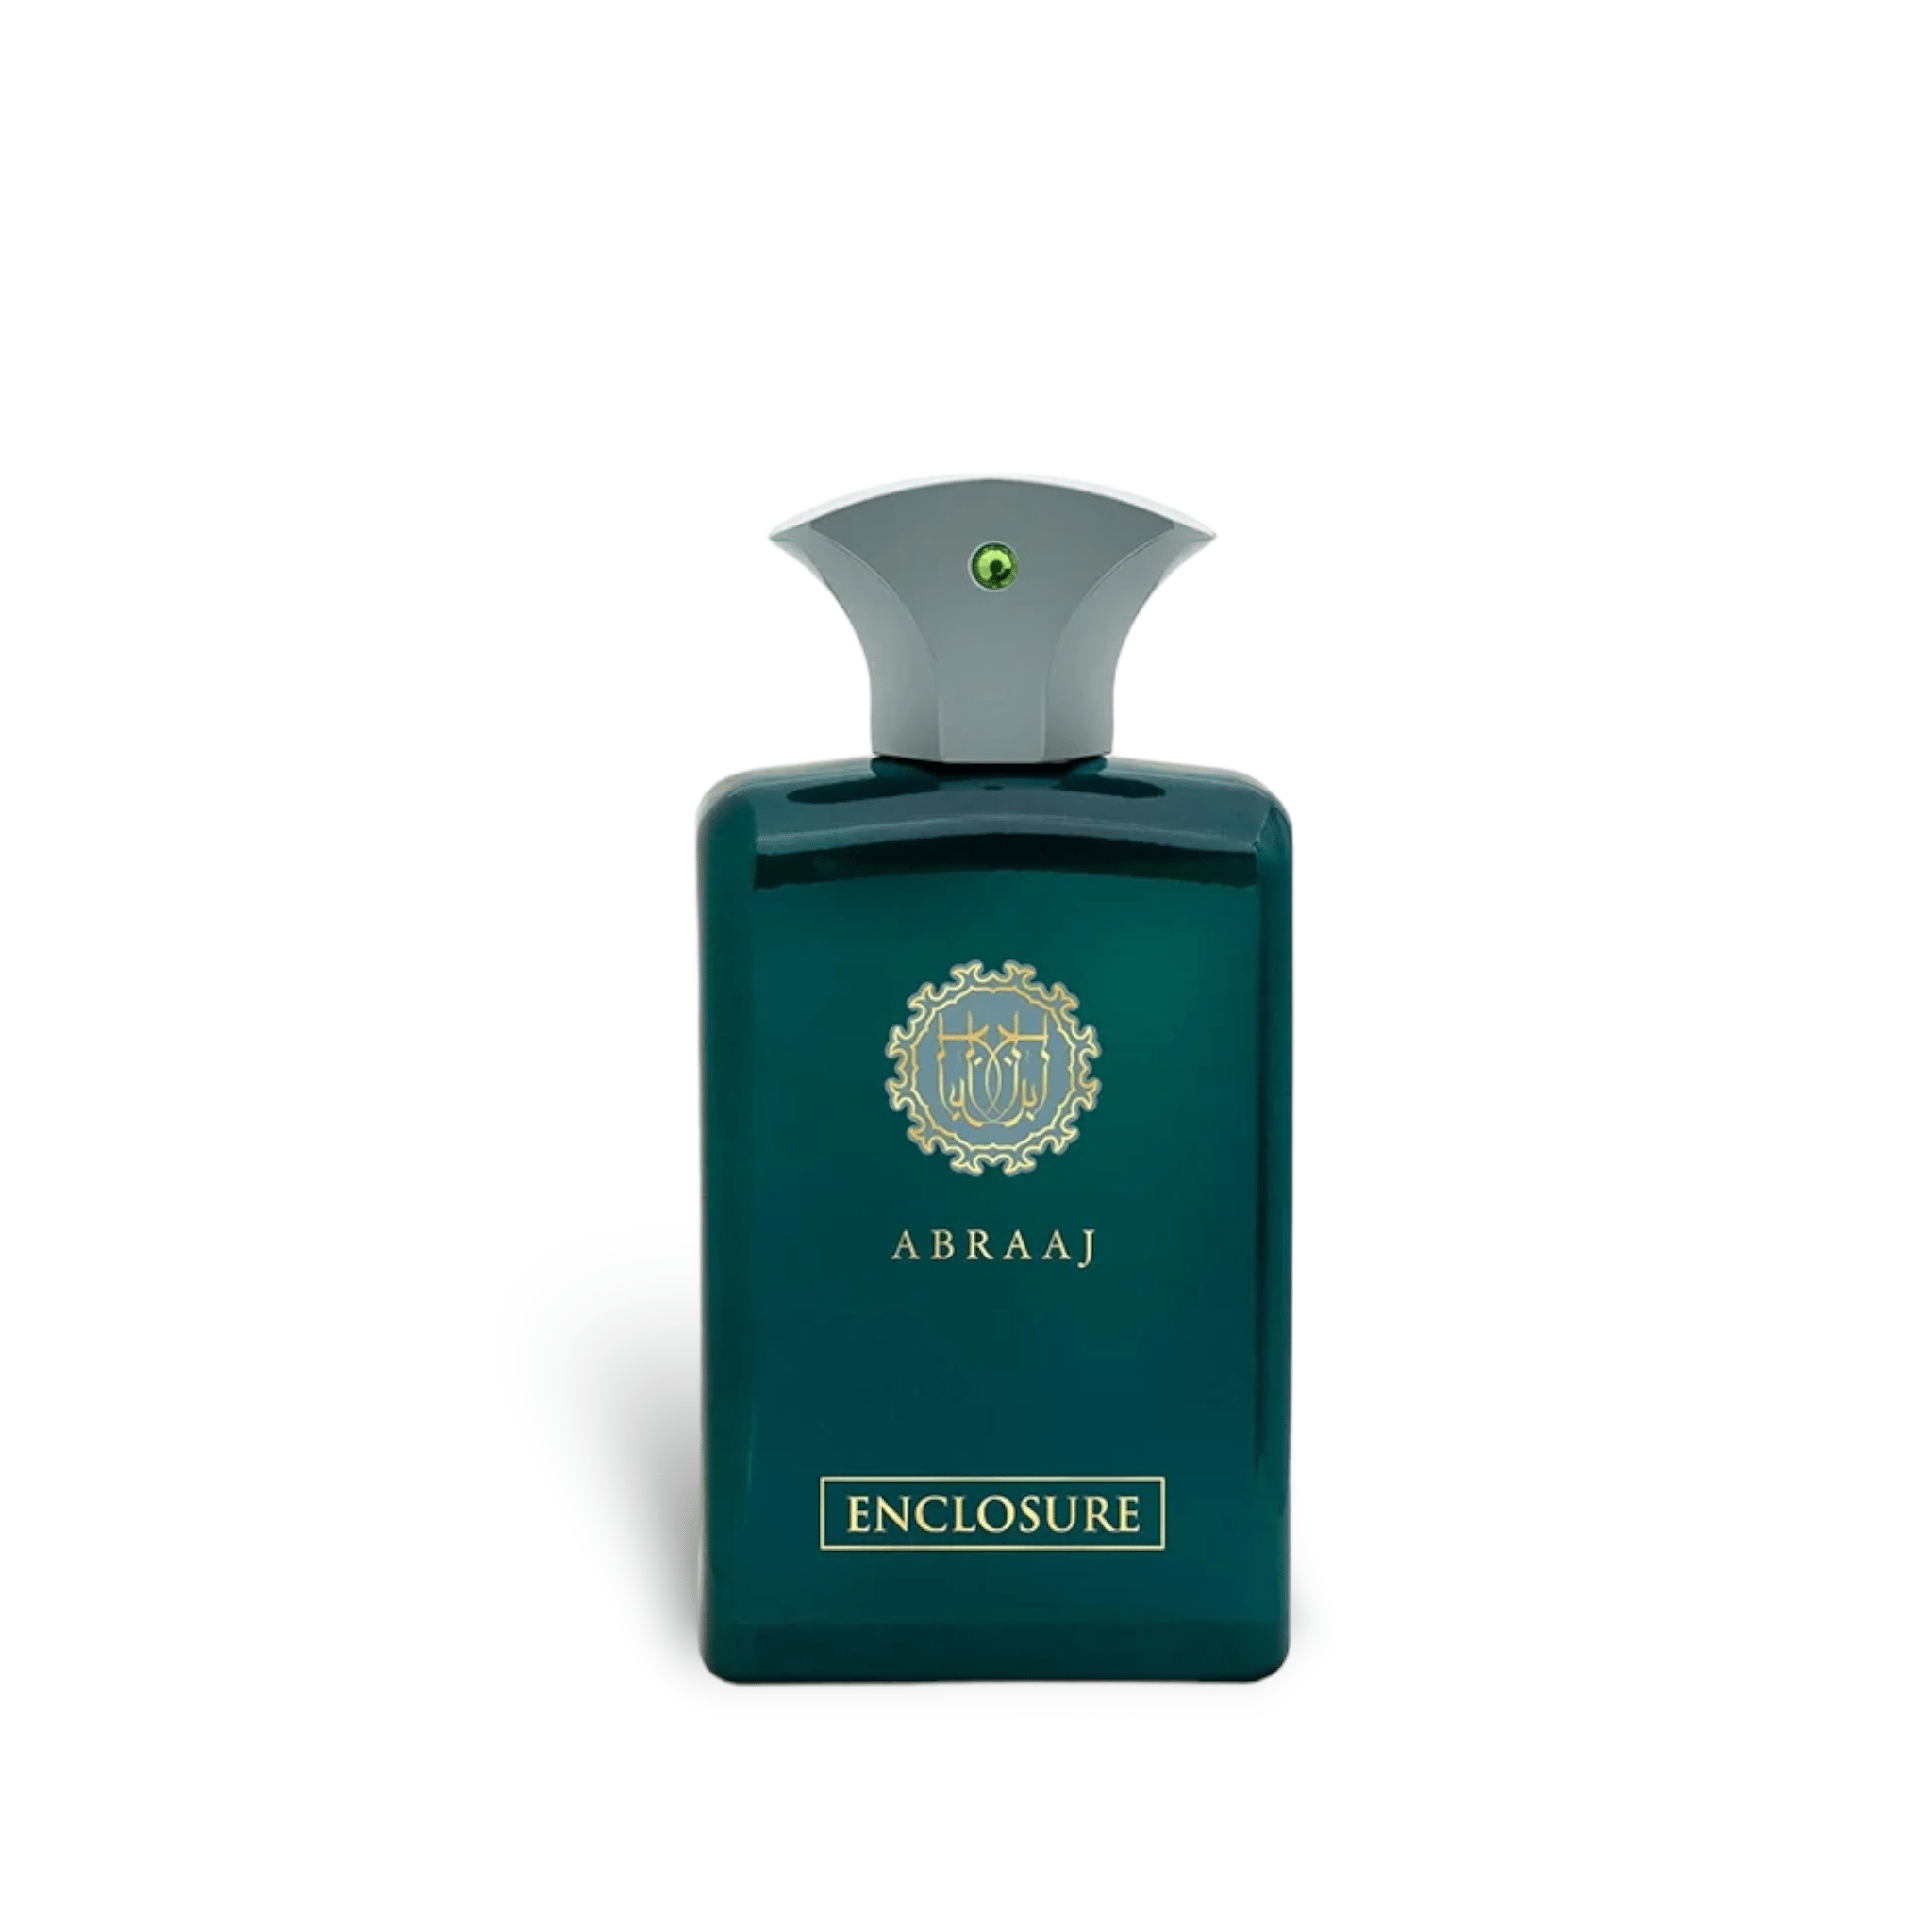 Abraaj Enclosure Perfume / Eau De Parfum 100Ml By Fa Paris (Fragrance World) (Inspired By Enclave)